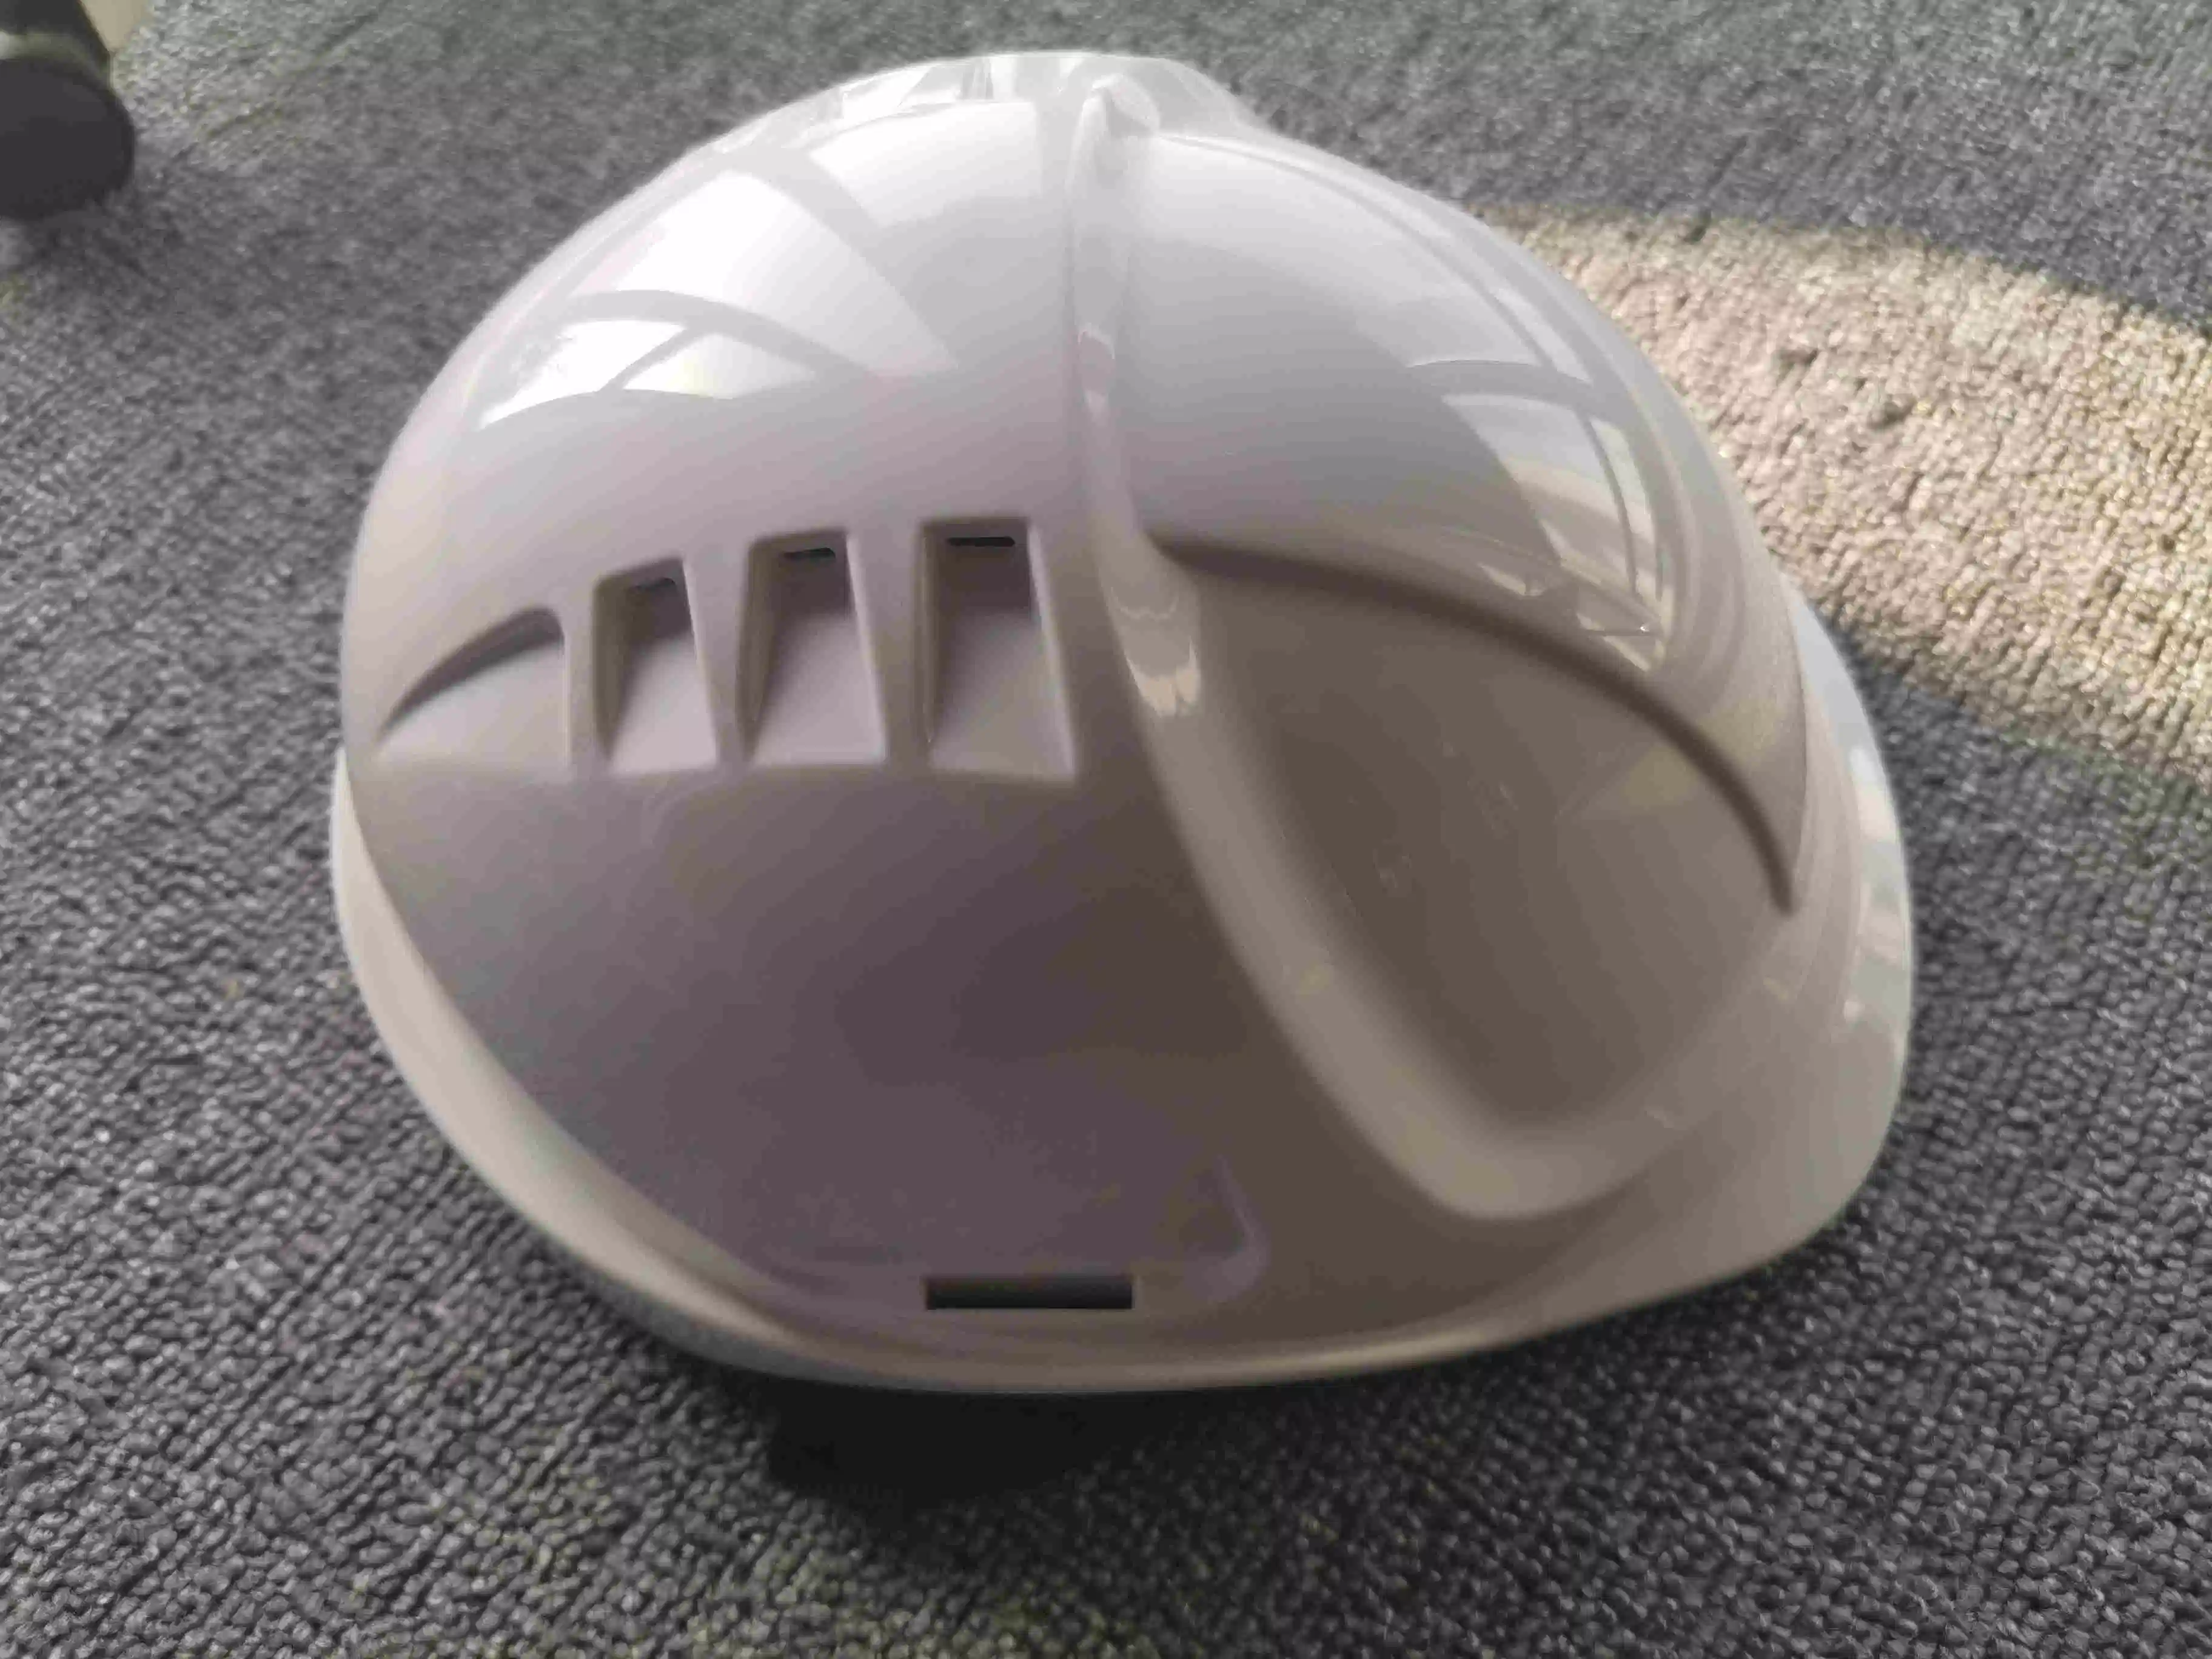 ANSI Z89.1 Type I Class E, G, C, AS/NZS, CE En397 Construction Hard Hat Safety Helmet PPE Equipment